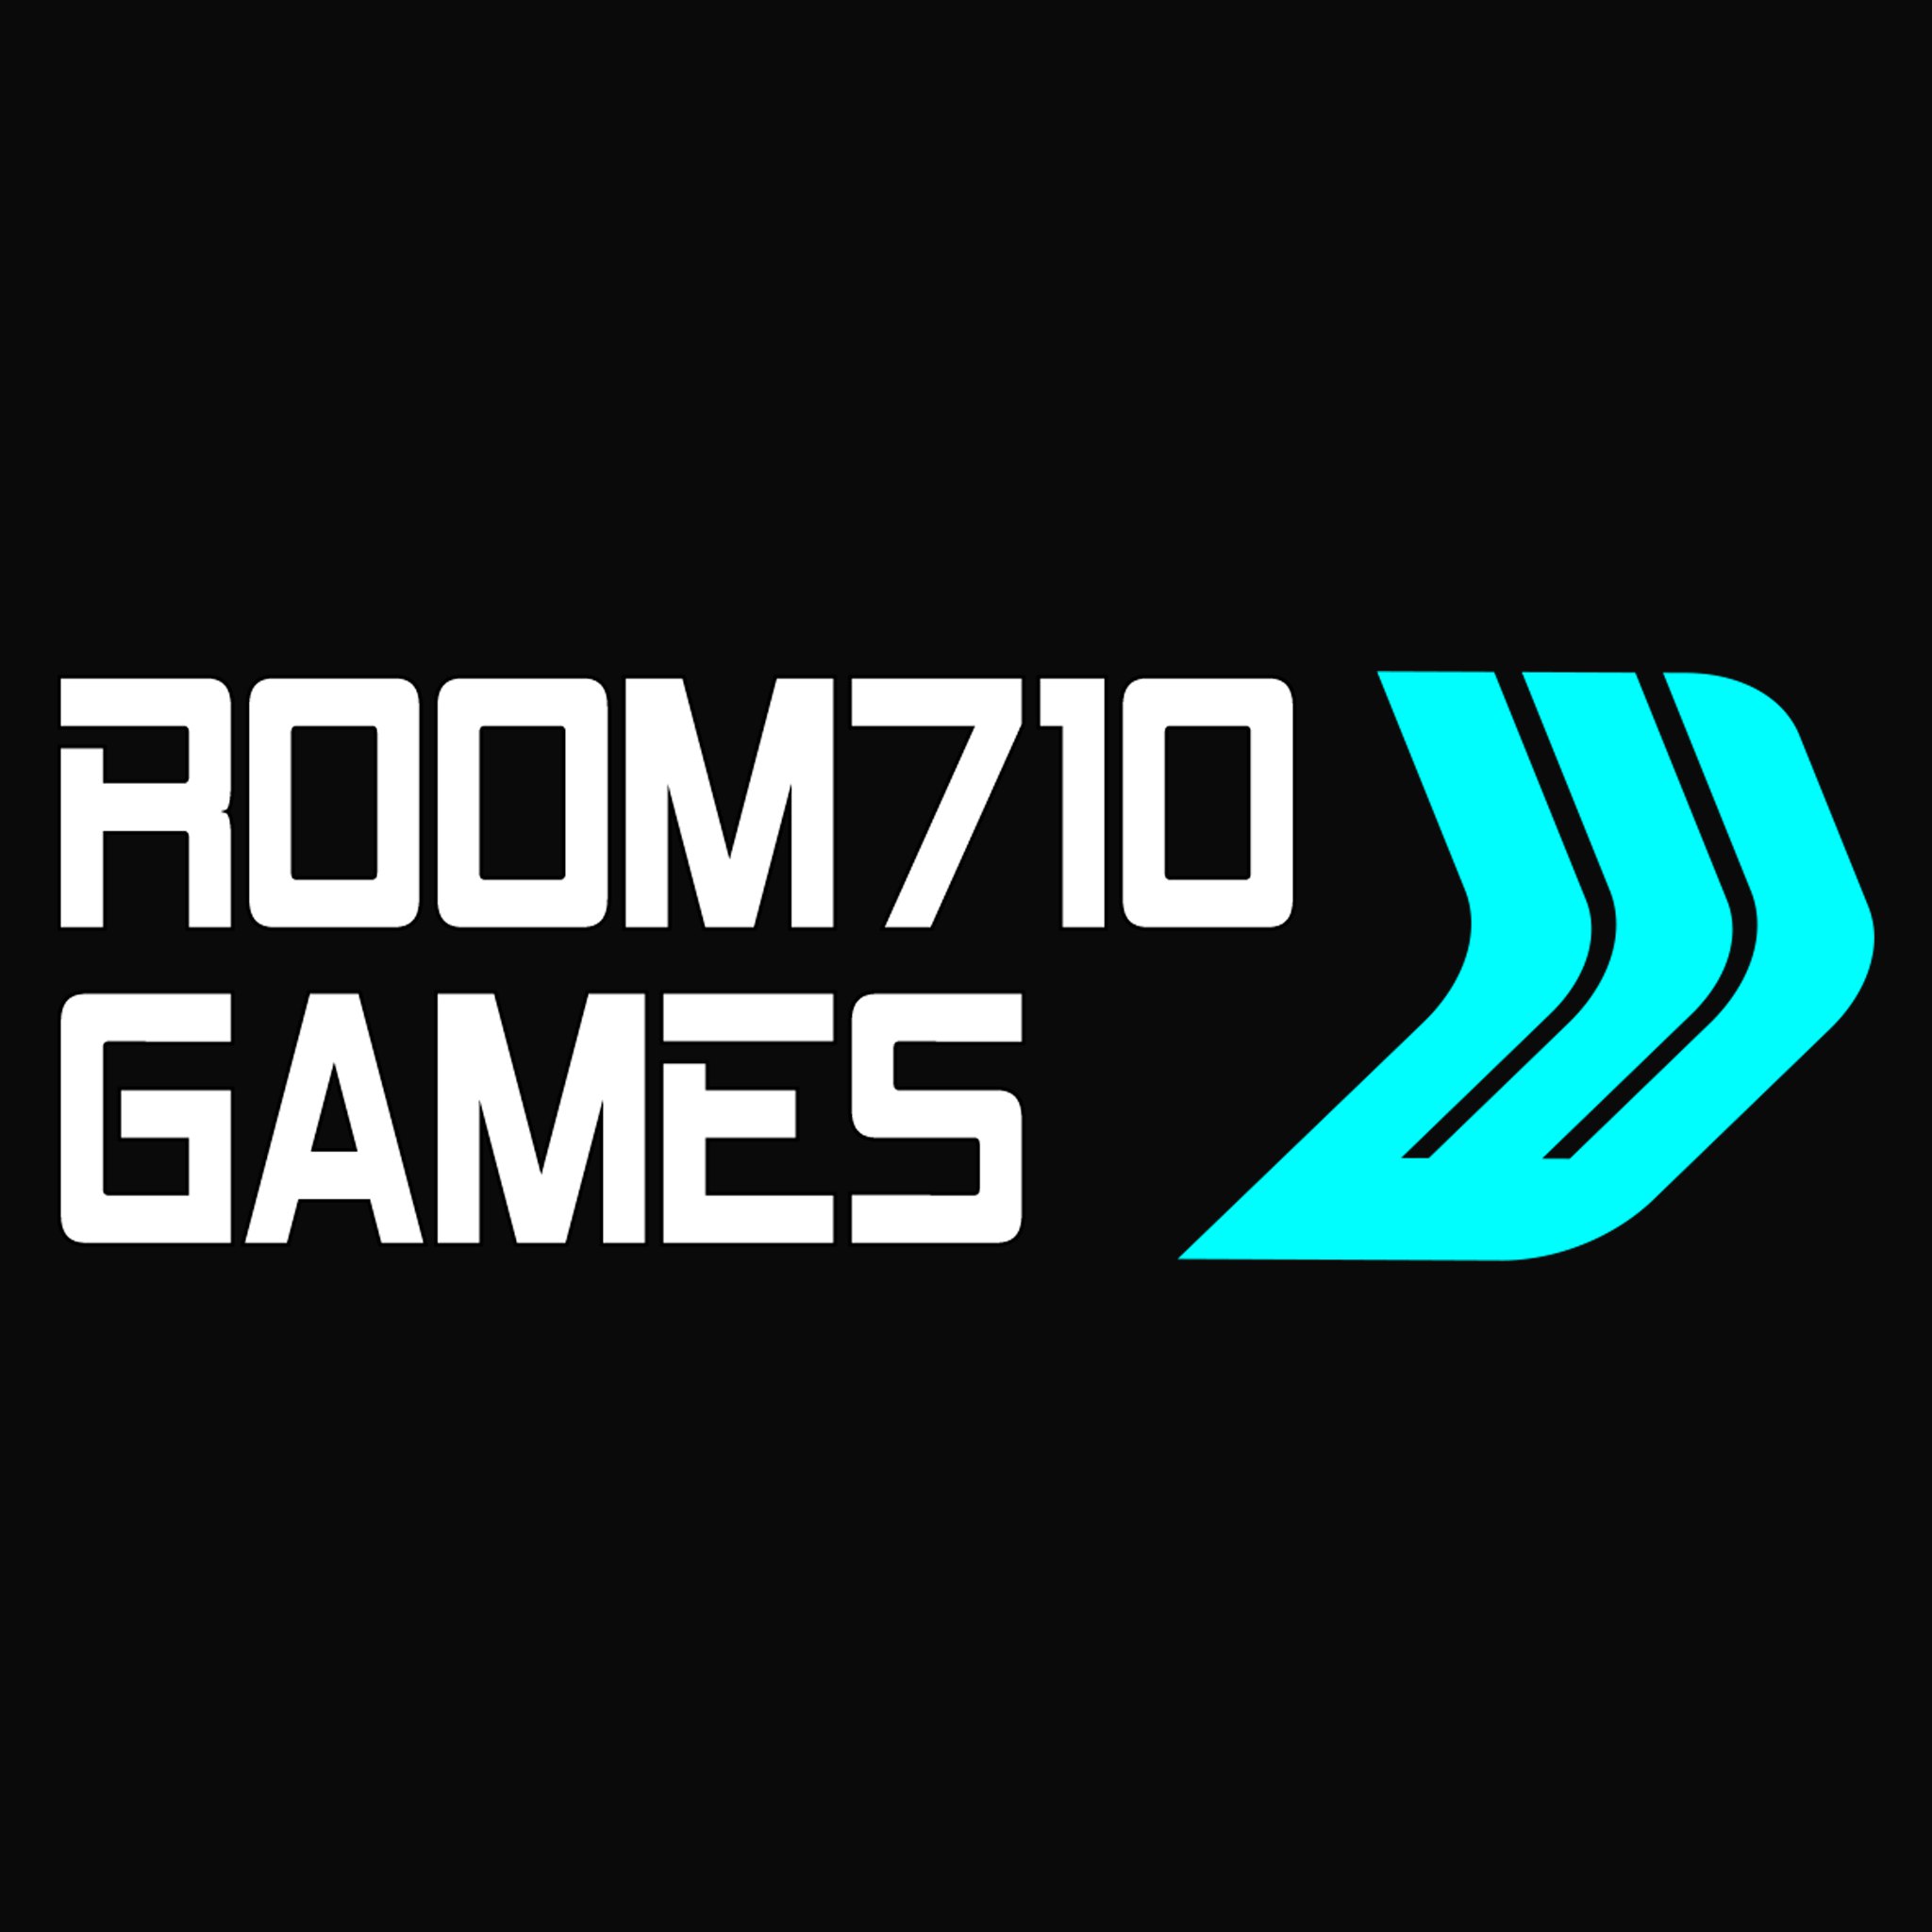 Room710Games